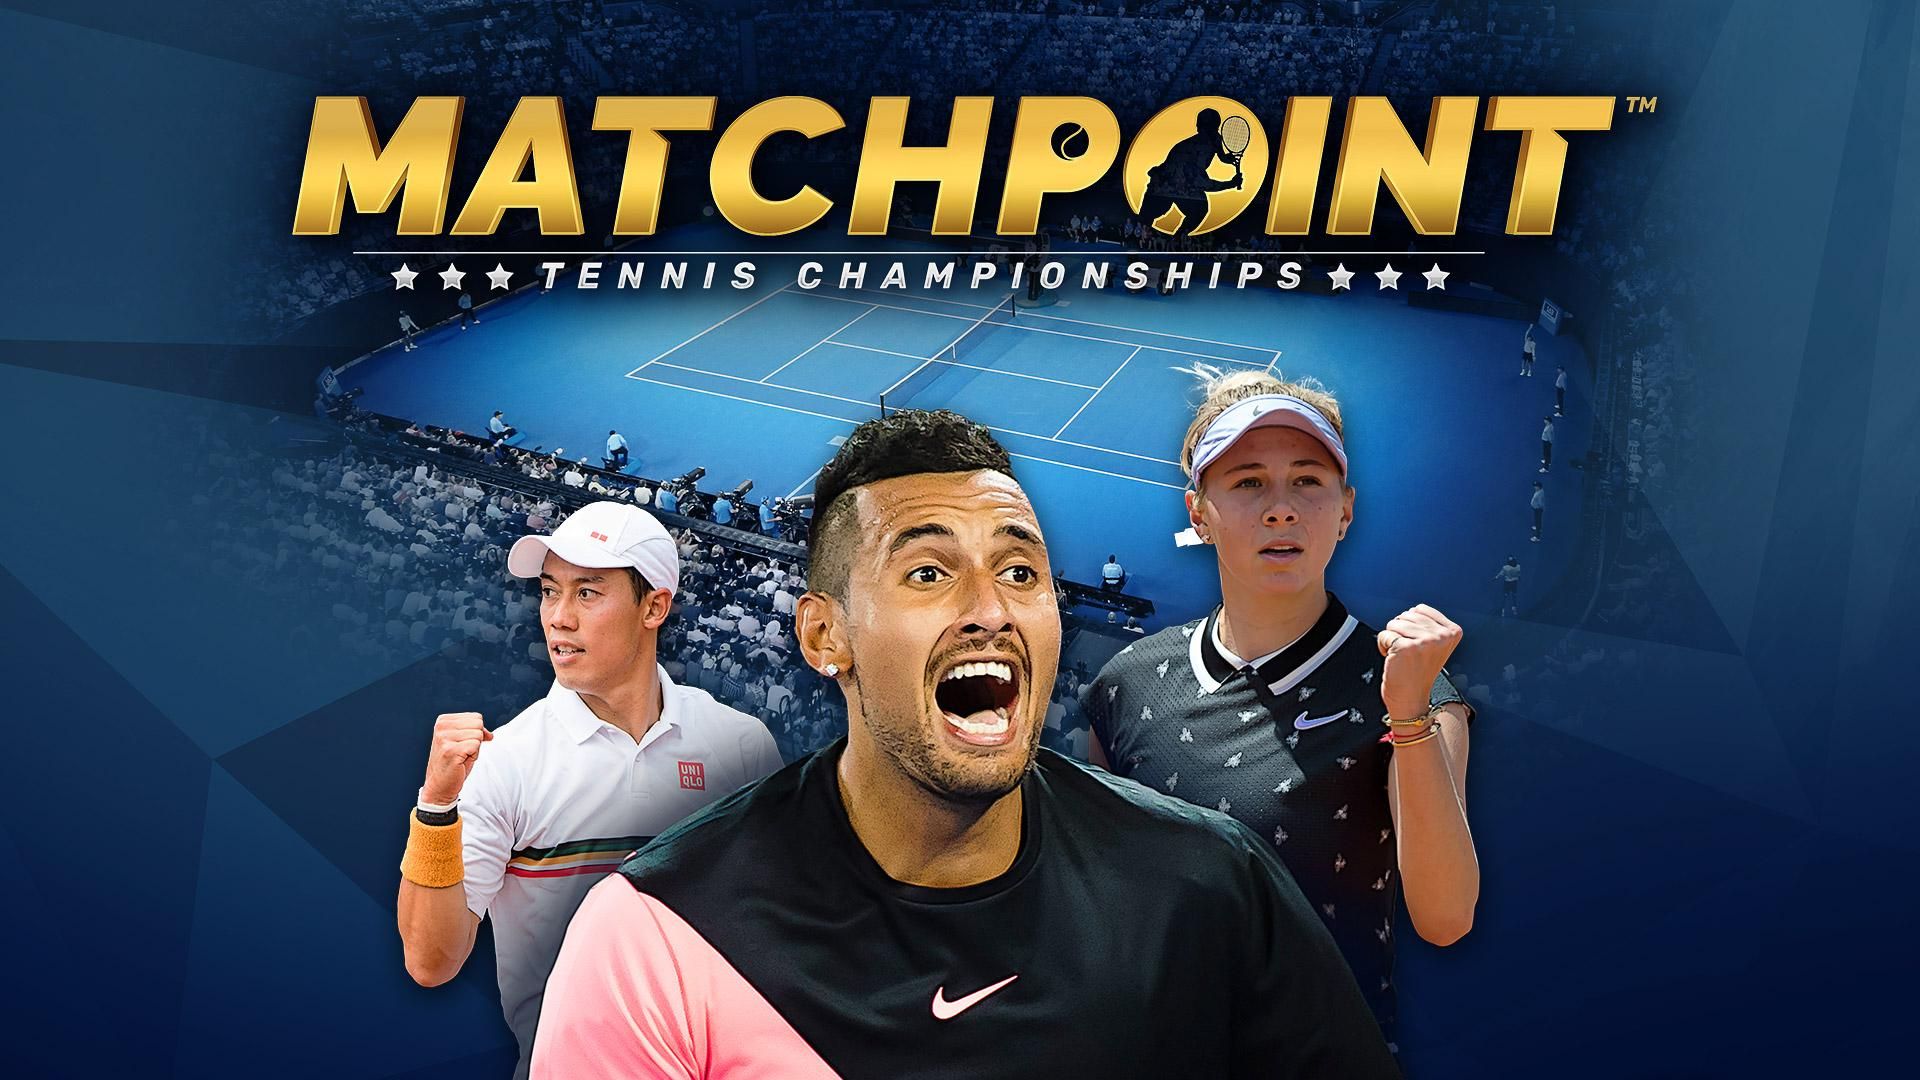 matchpoint-tennis-championships-key-art